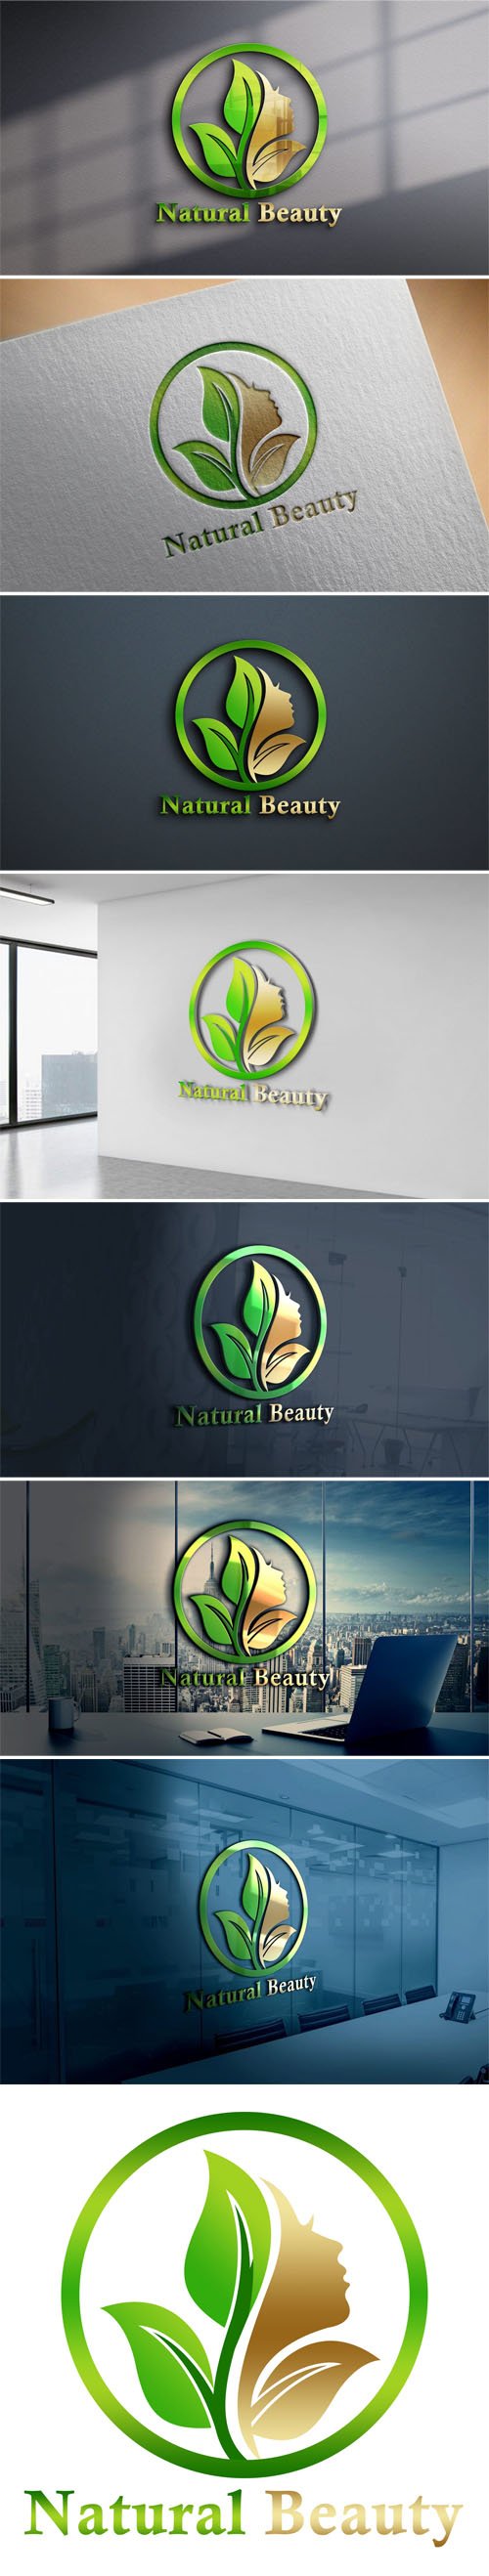 Natural Beauty Logo PSD Design Template